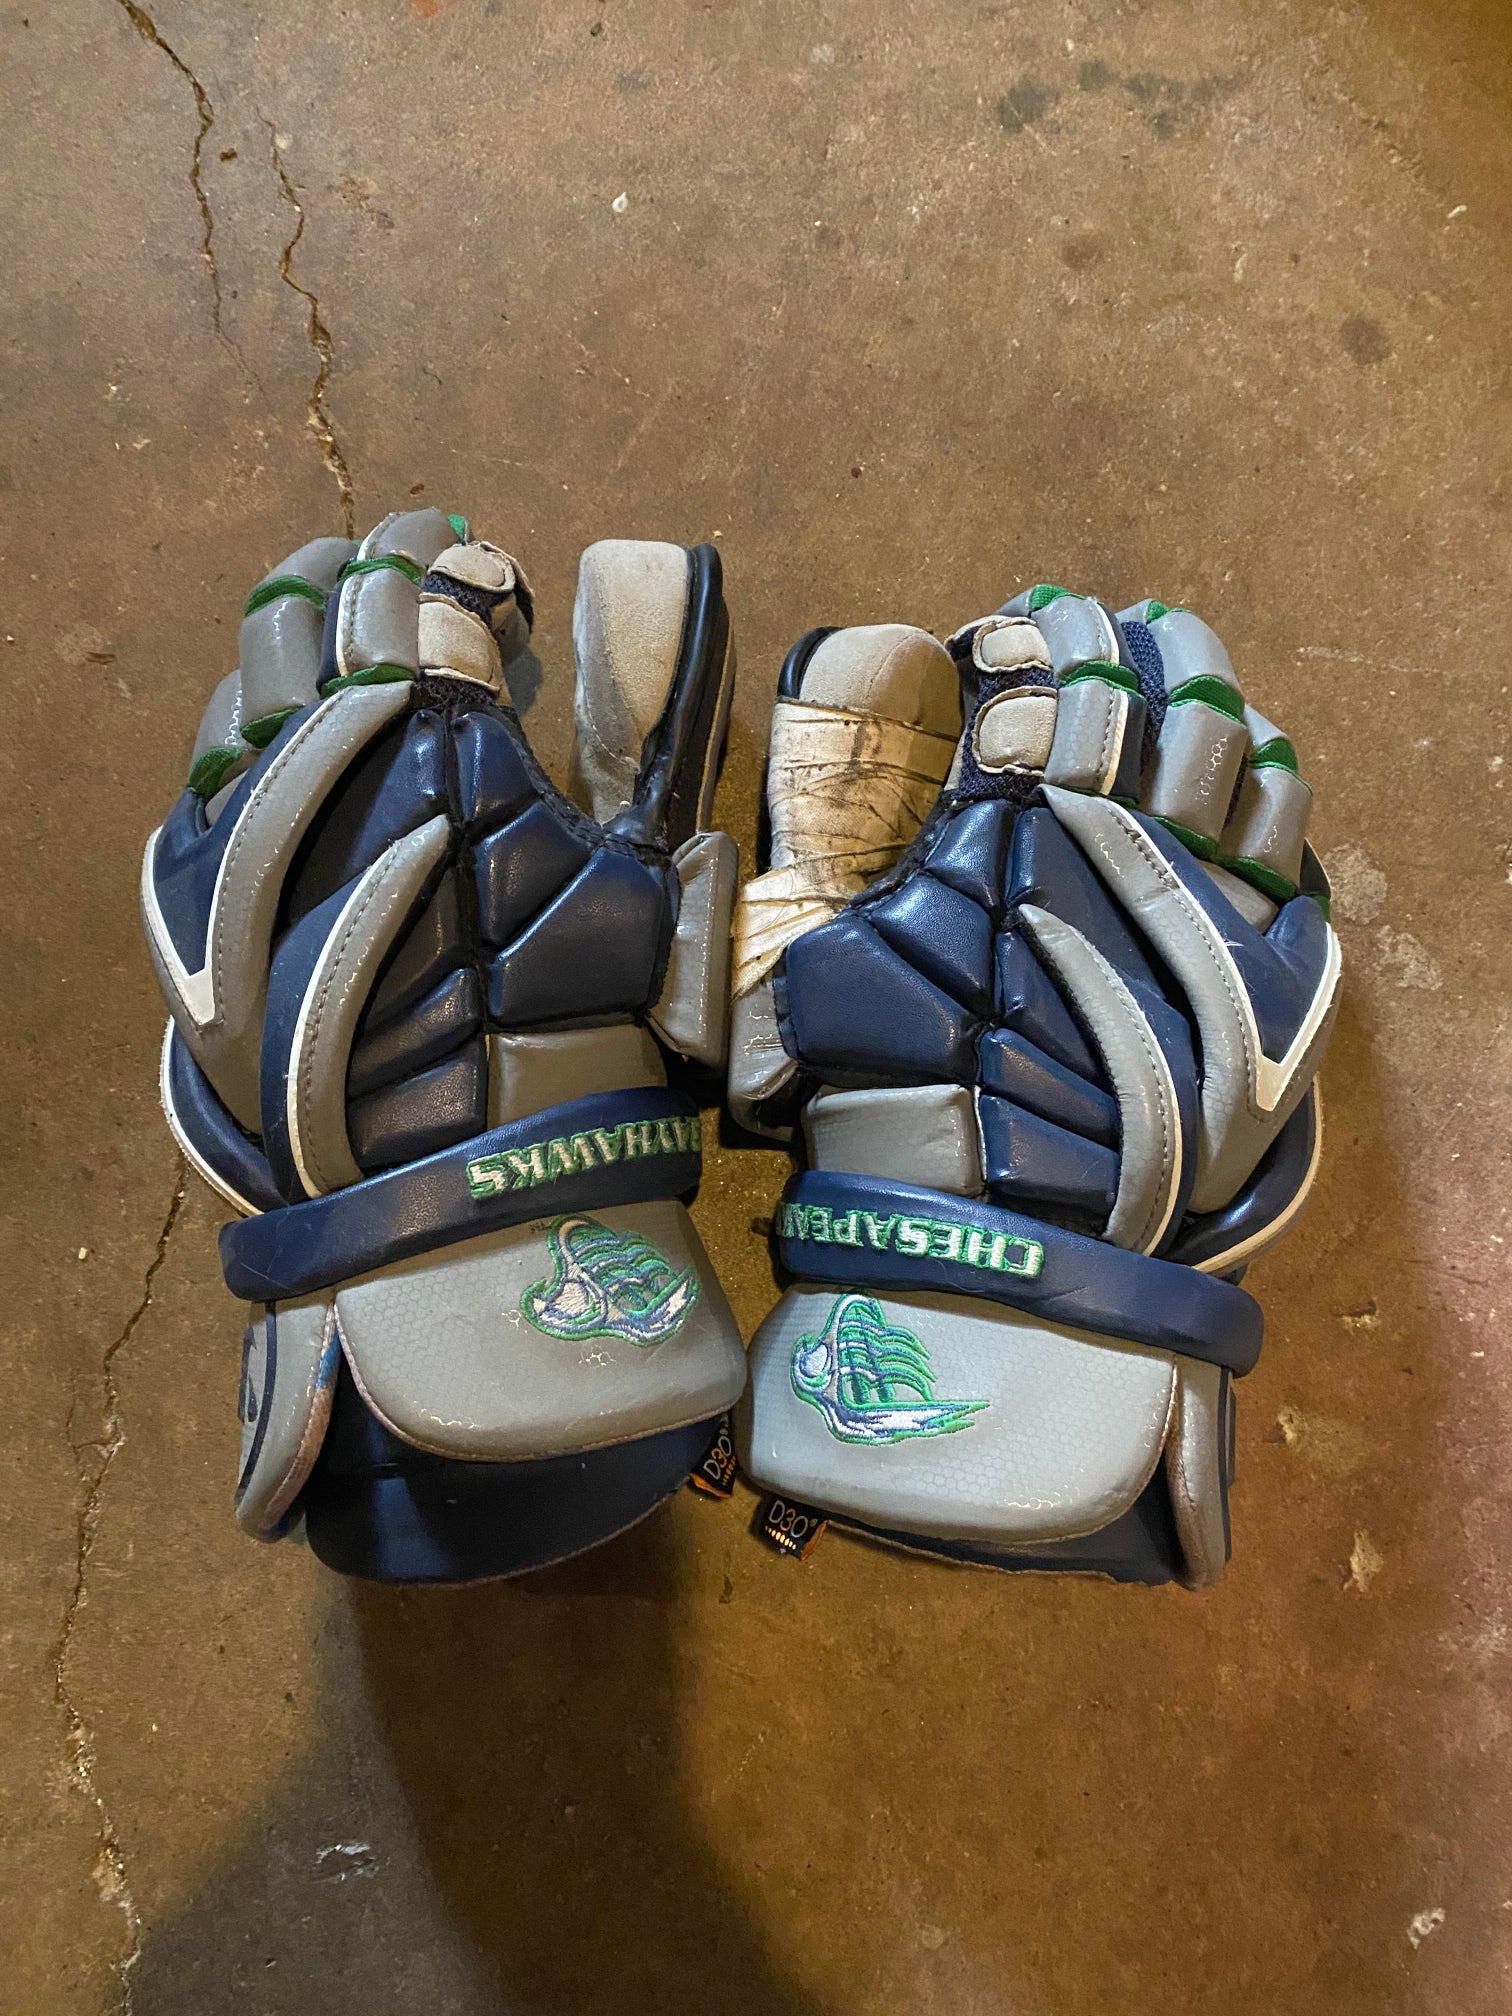 Used Goalie mll bayhawk gloves